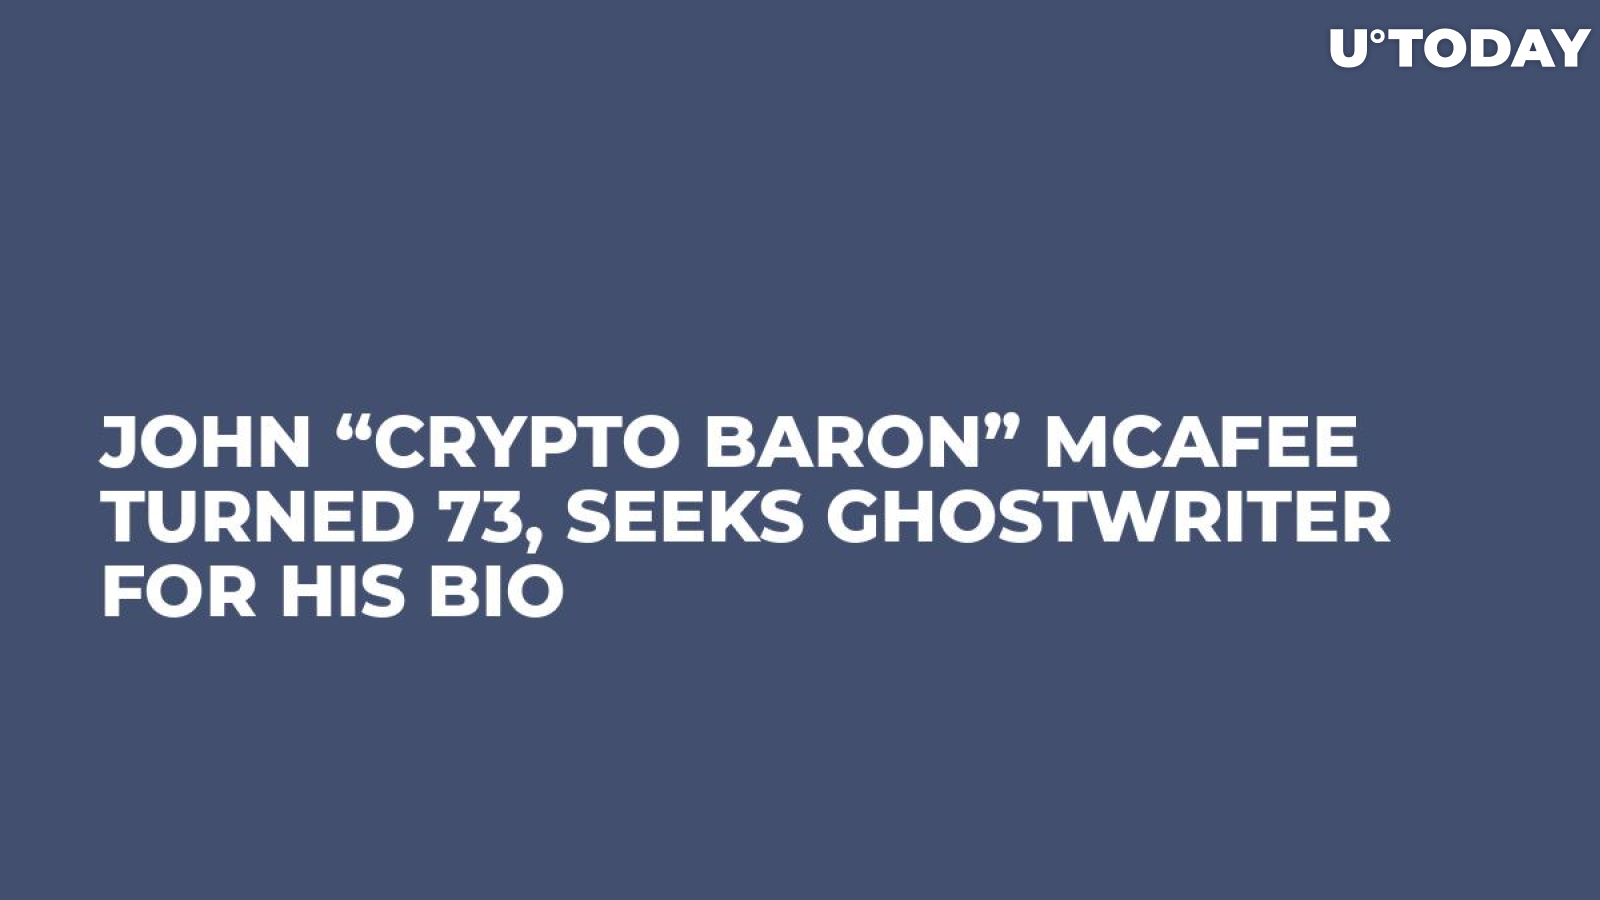 John “Crypto Baron” McAfee Turned 73, Seeks Ghostwriter for His Bio